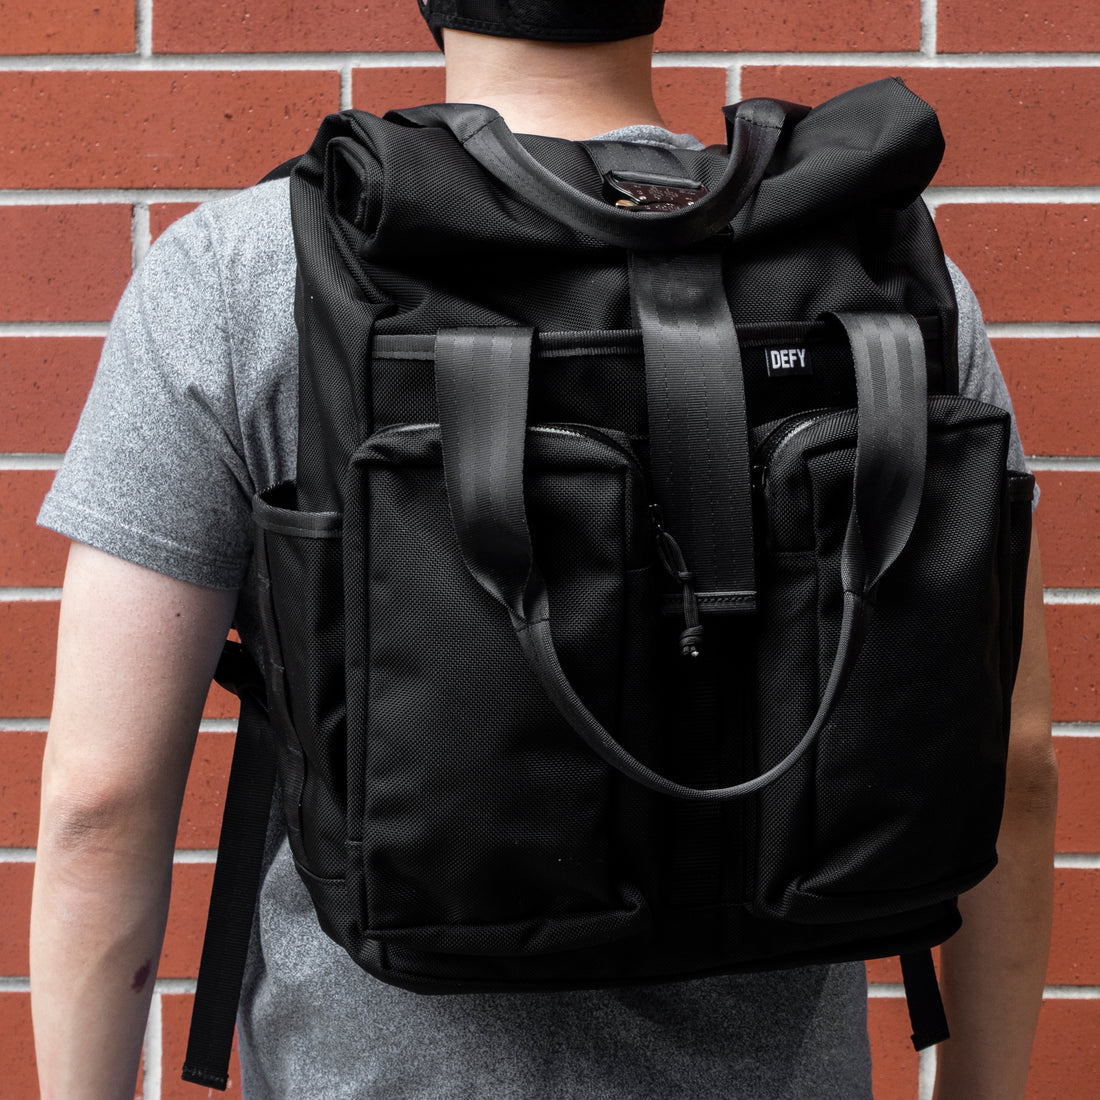 VerBockel 'Day Pack' Roll Top Backpack 2.0 Ballistic Nylon